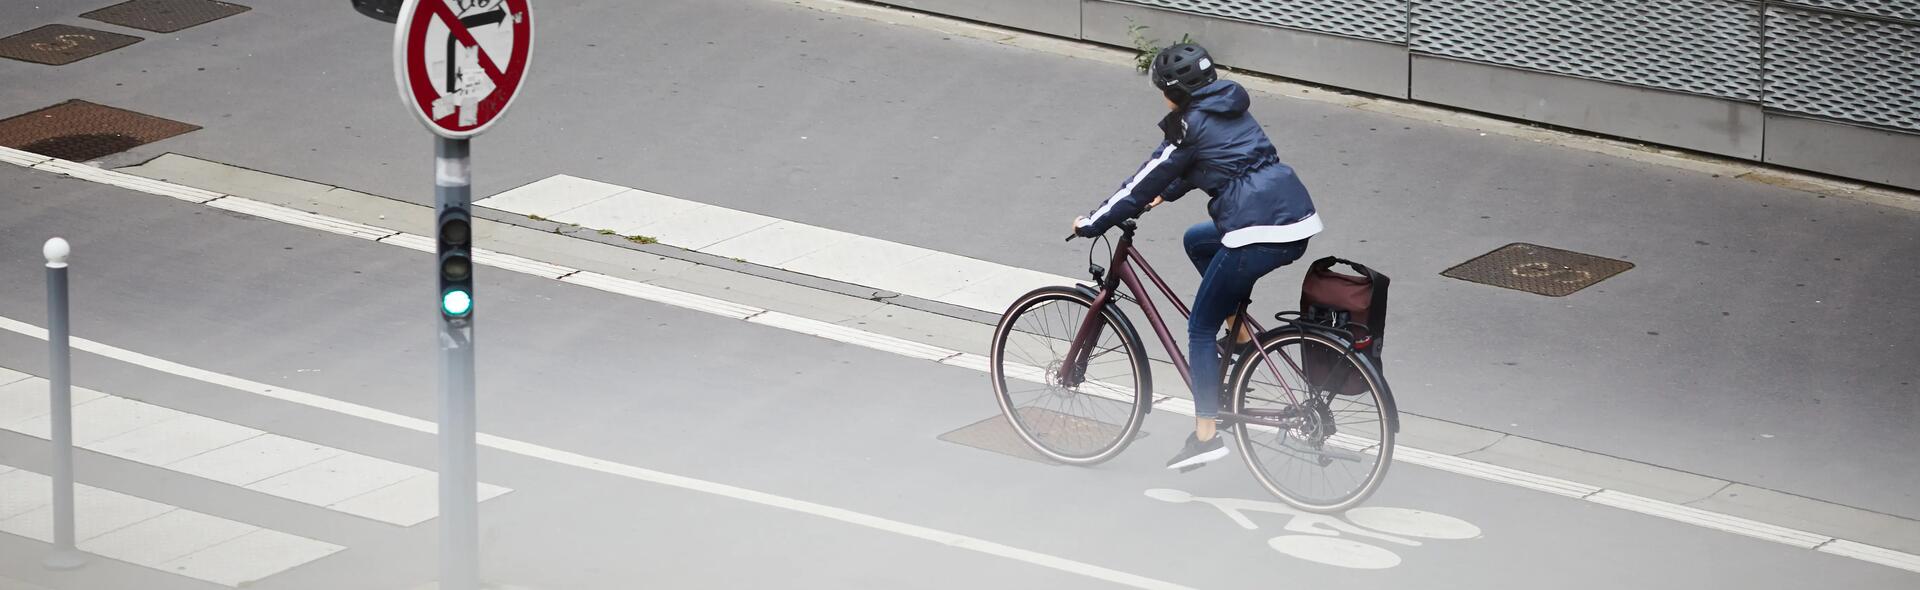 spv bicicleta urbana decathlon spv elops urbana larga distancia problema